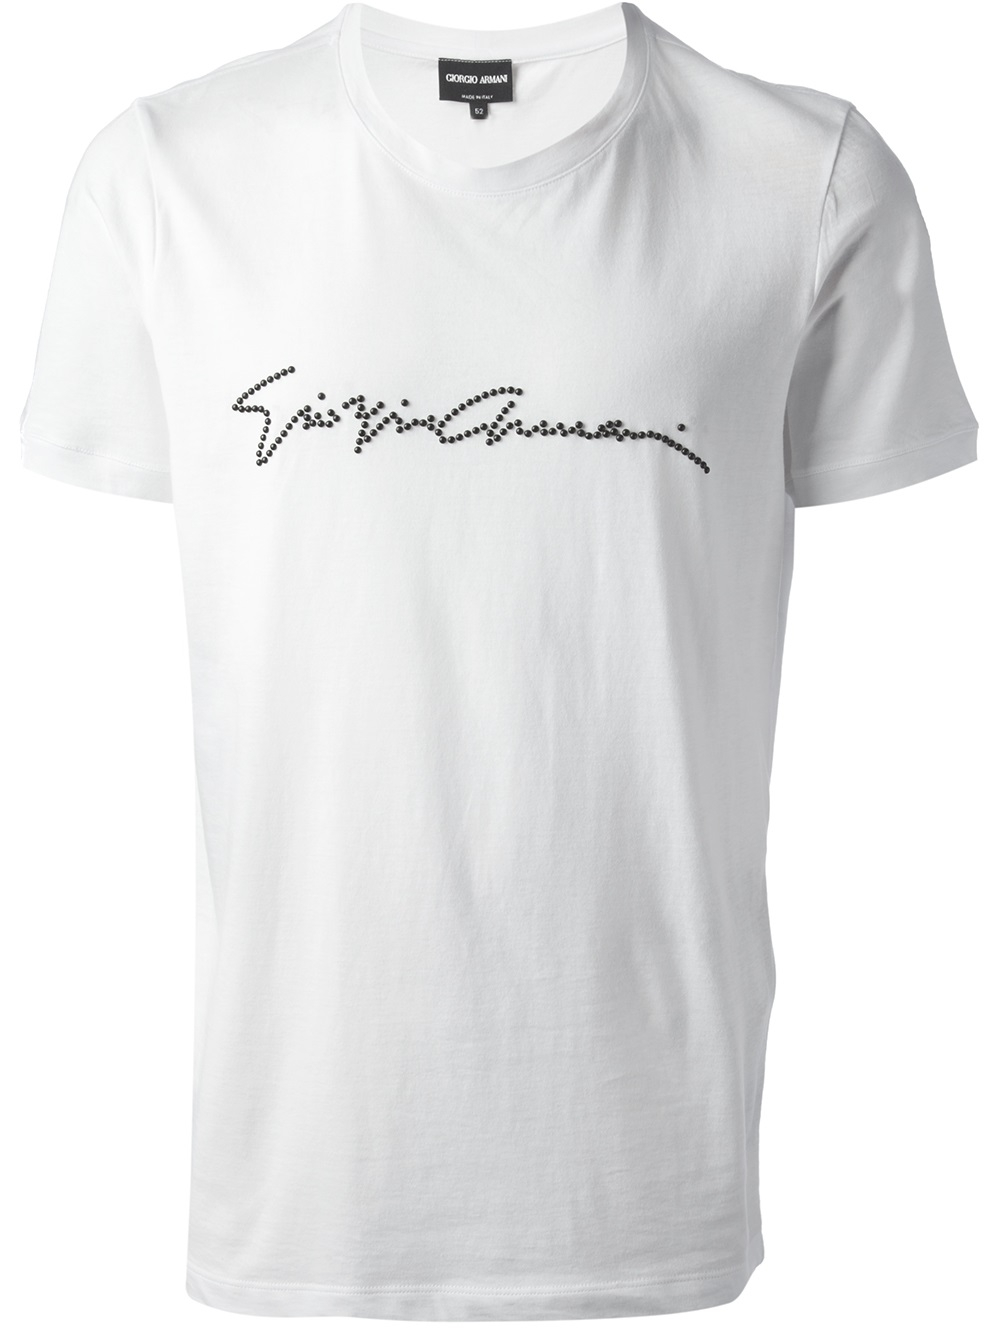 Giorgio Armani Beaded Logo T-Shirt in White for Men - Lyst